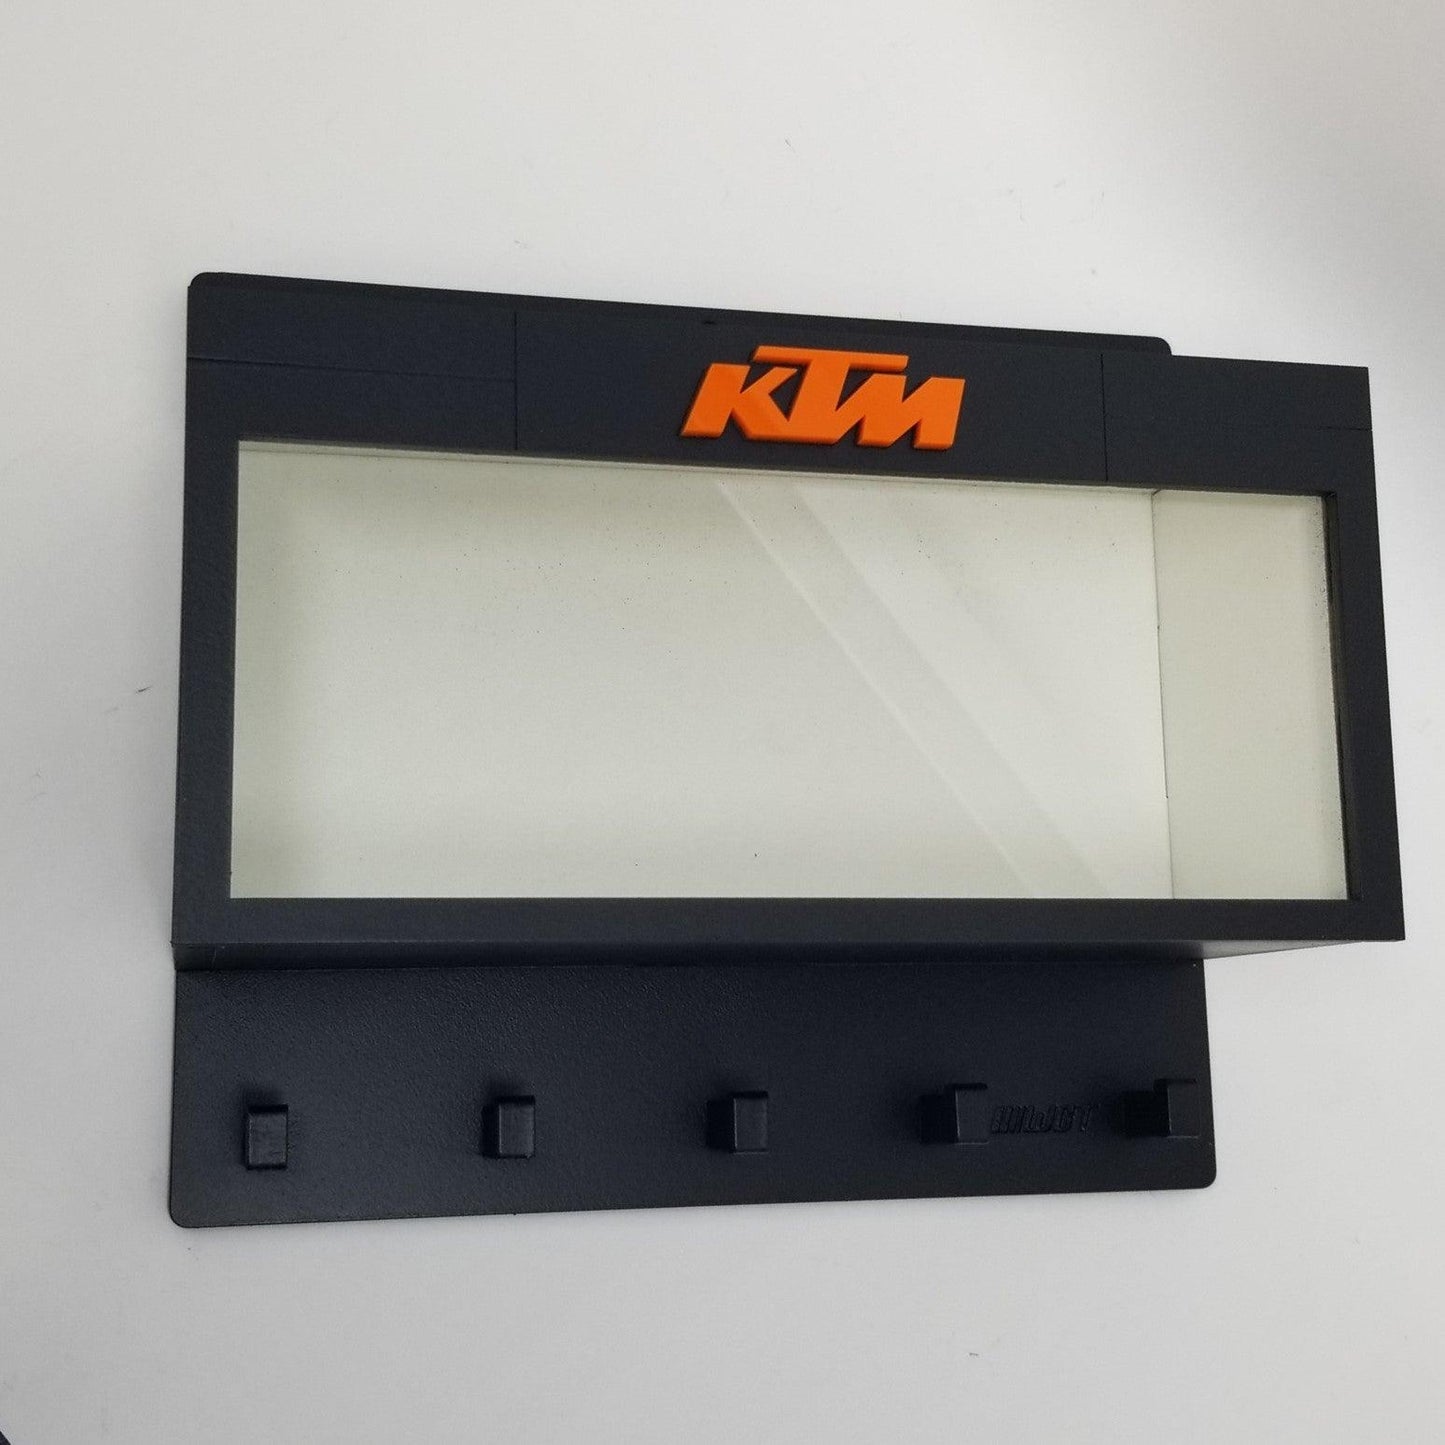 KTM Dealership Wall Key Hook Rack - Exclusive item - Handcrafted Key Holder - Brazilian Shop